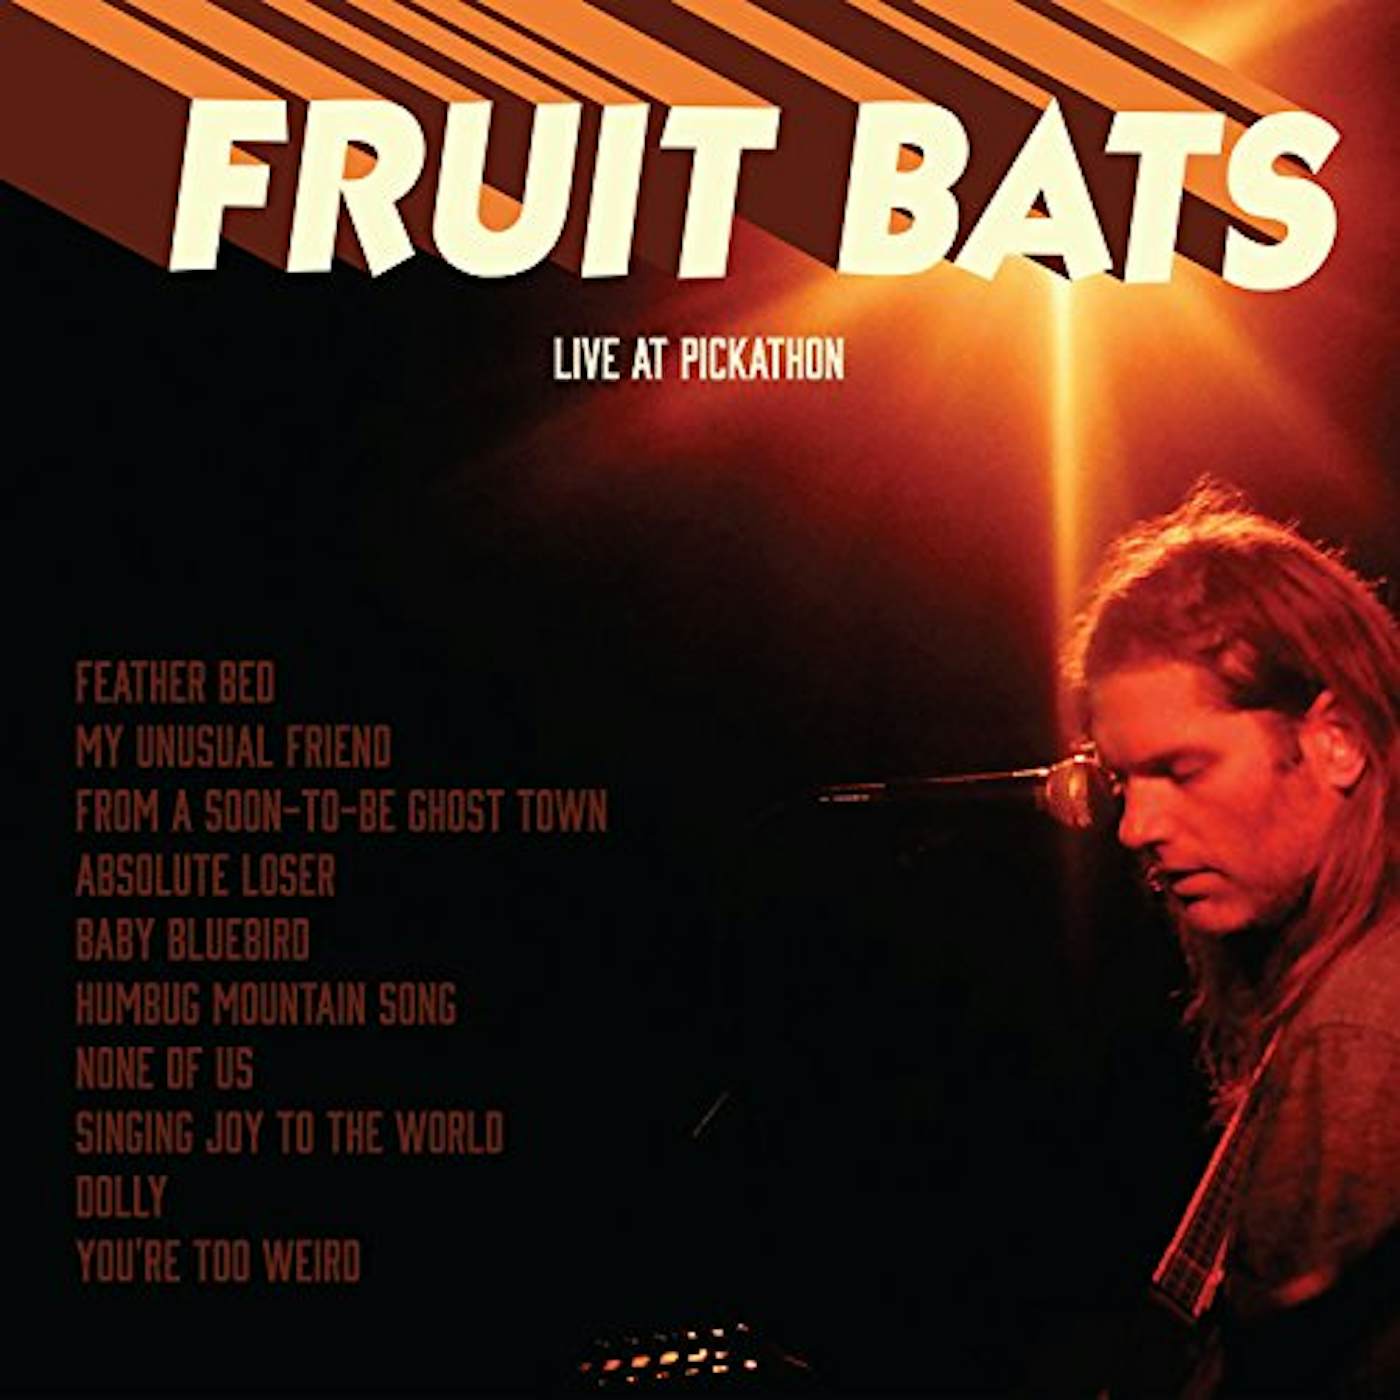 Fruit Bats Live At Pickathon Vinyl Record